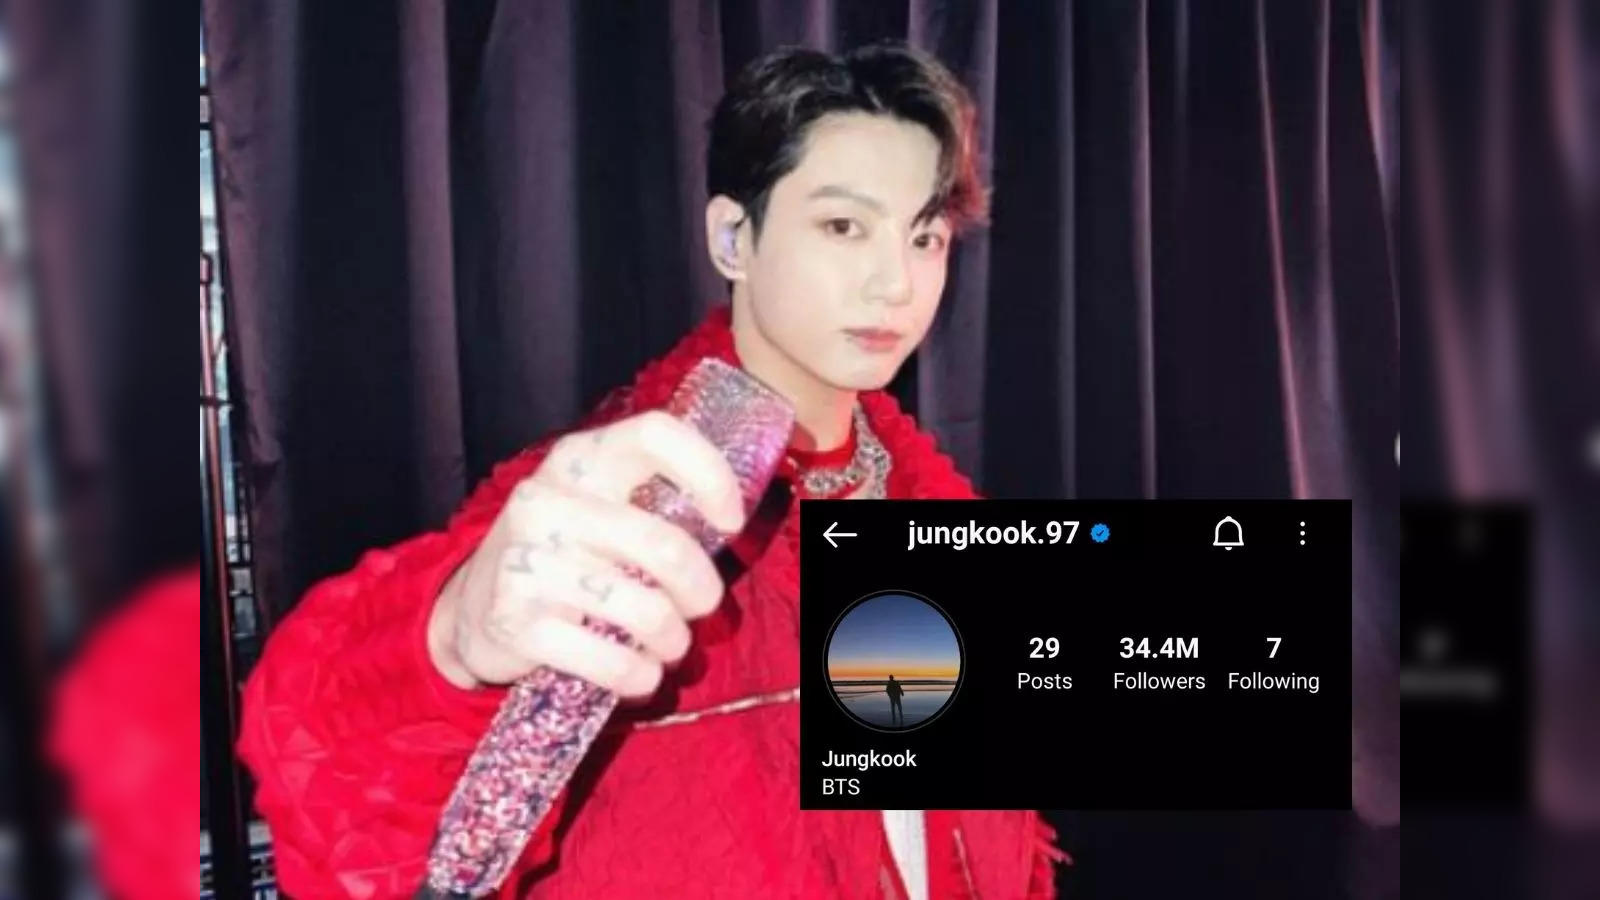 Why Did BTS' Jungkook Leave Instagram?